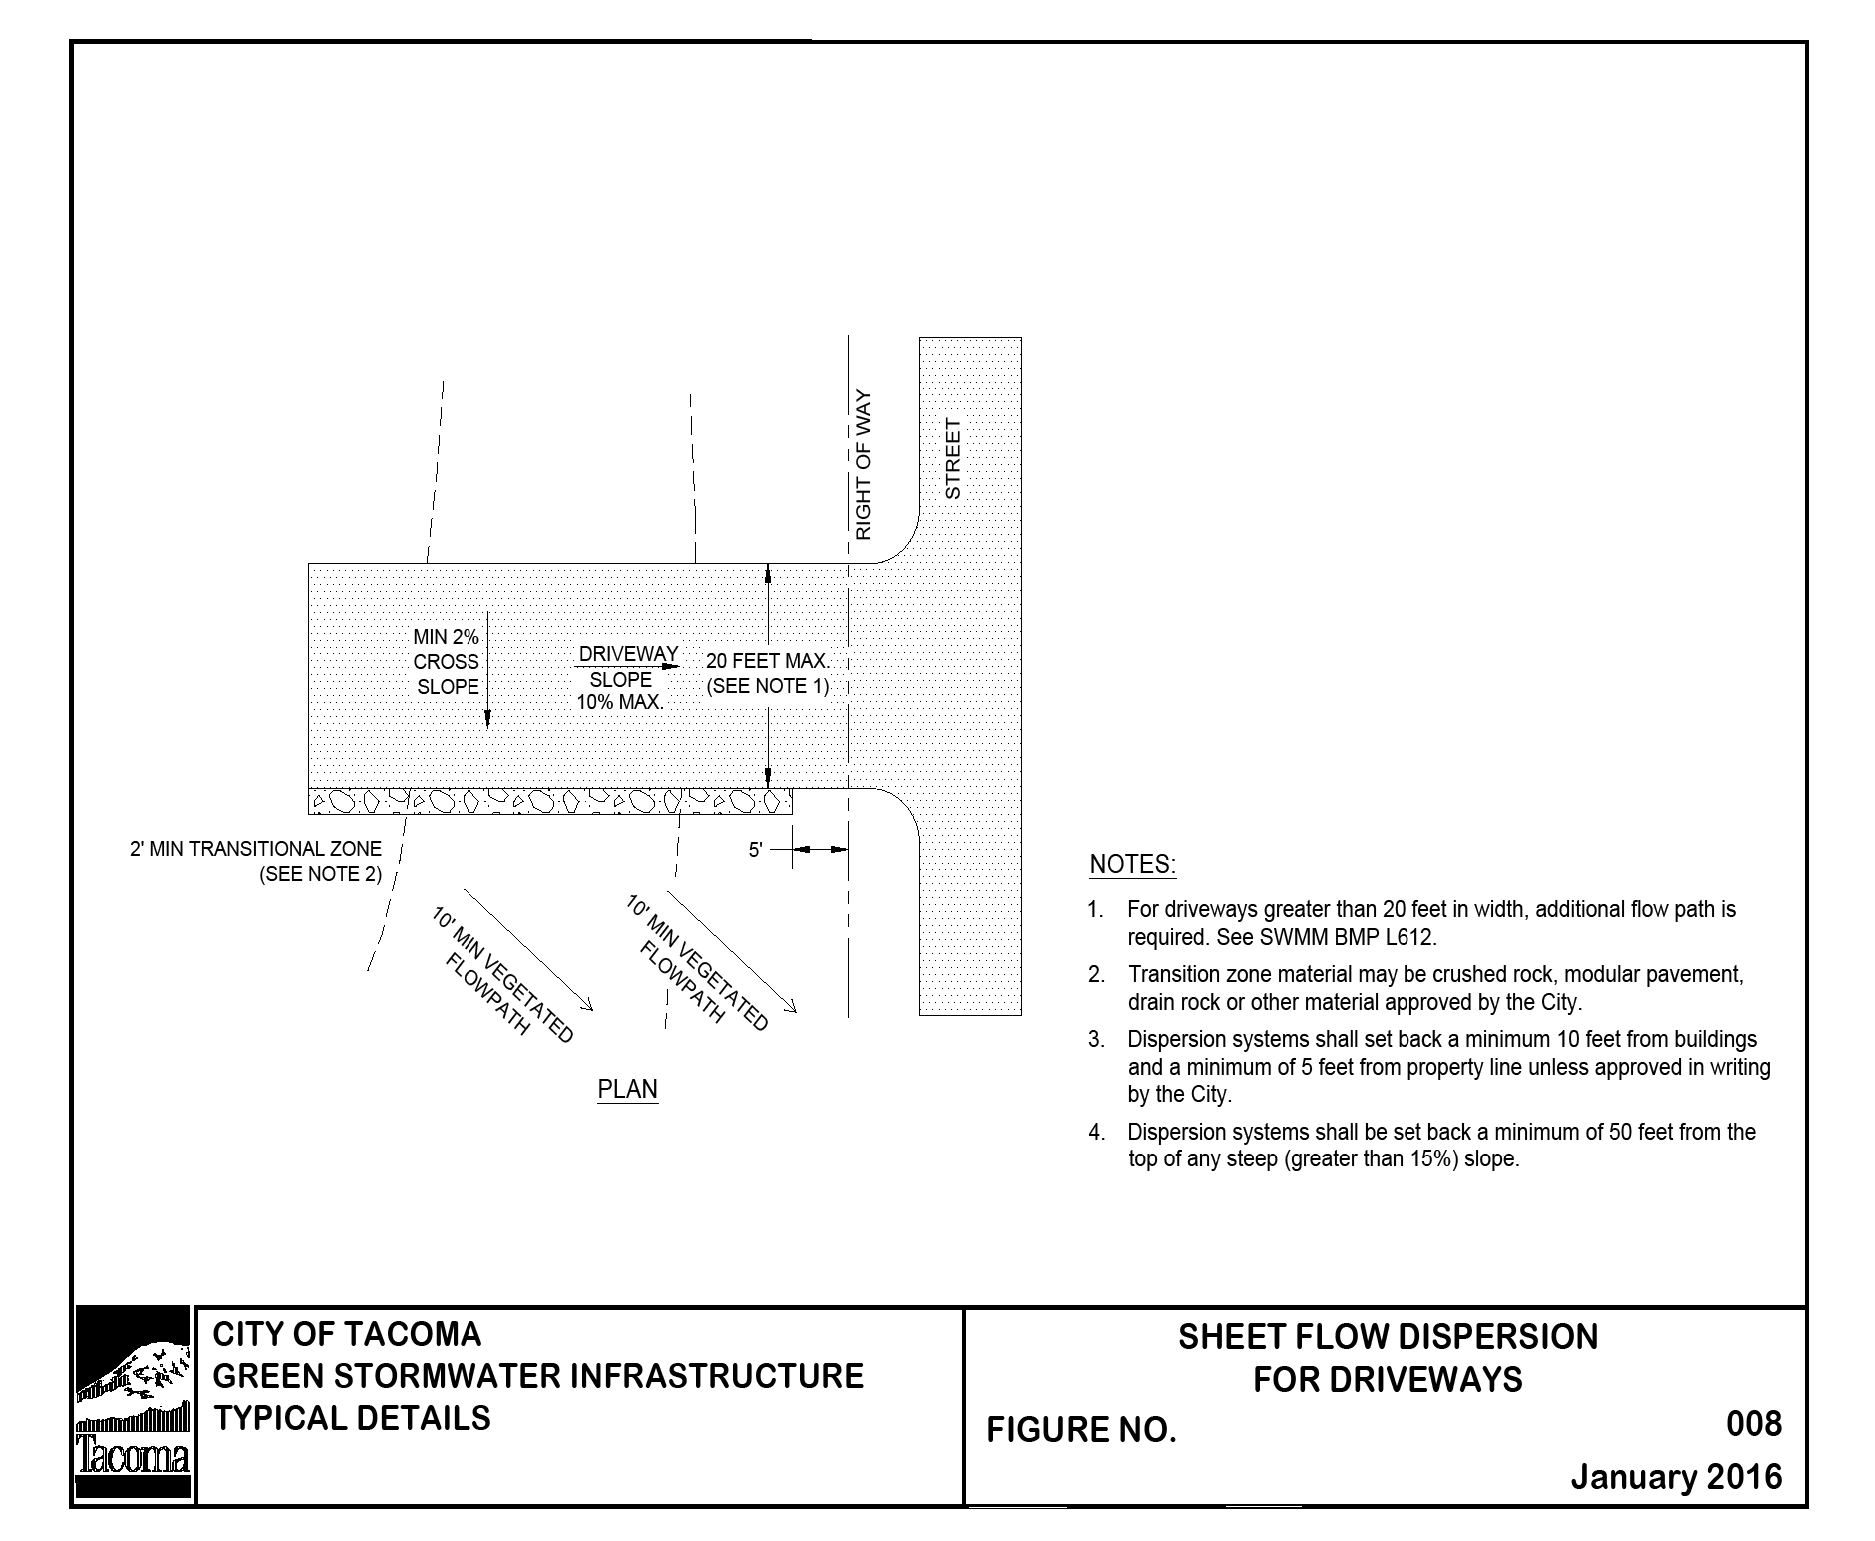 Figure 4-10 Sheet Flow Dispersion for Driveways